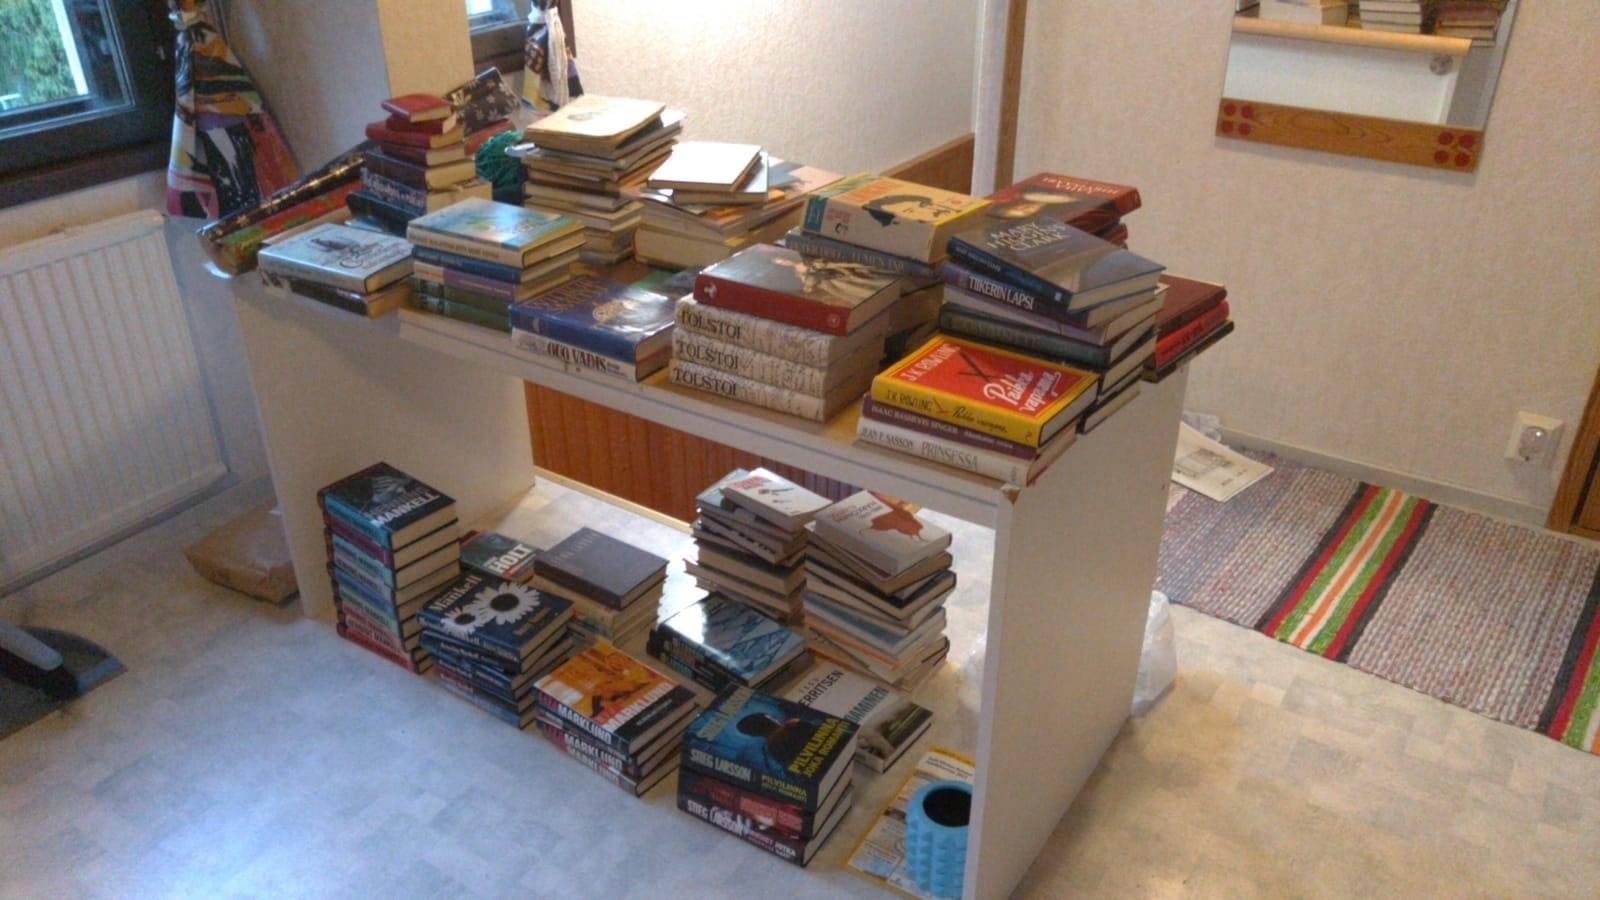 books on the floor, books on a desk, multitude of books